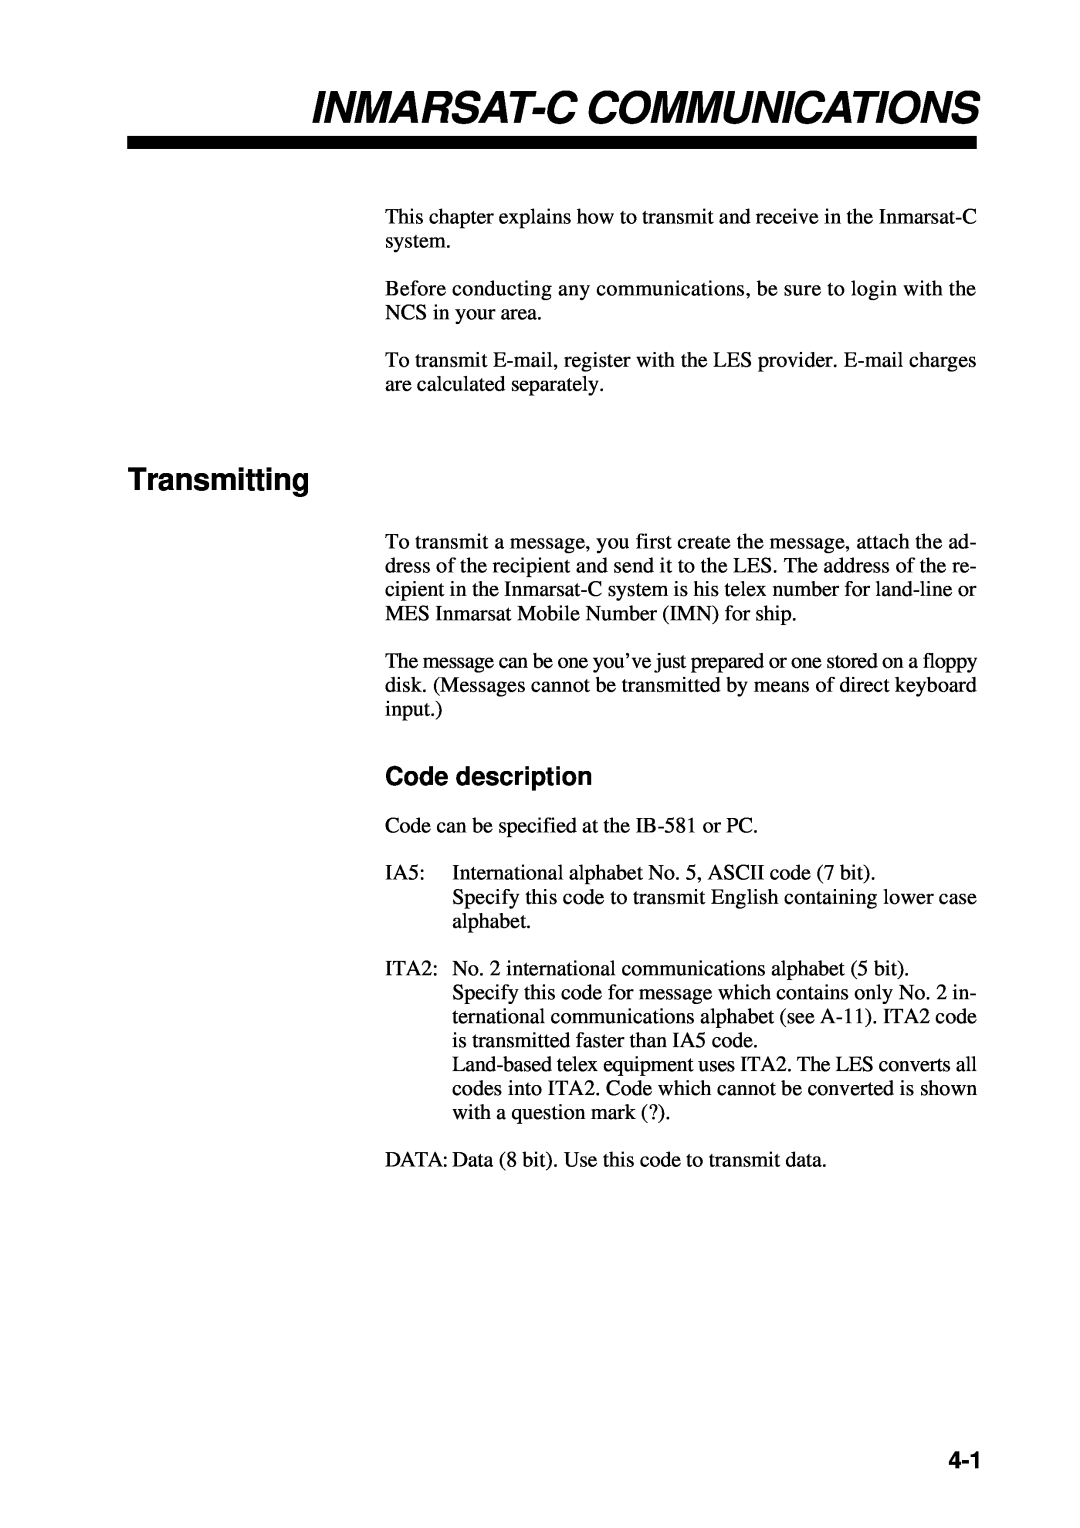 Furuno RC-1500-1T manual Inmarsat-C Communications, Transmitting, Code description 